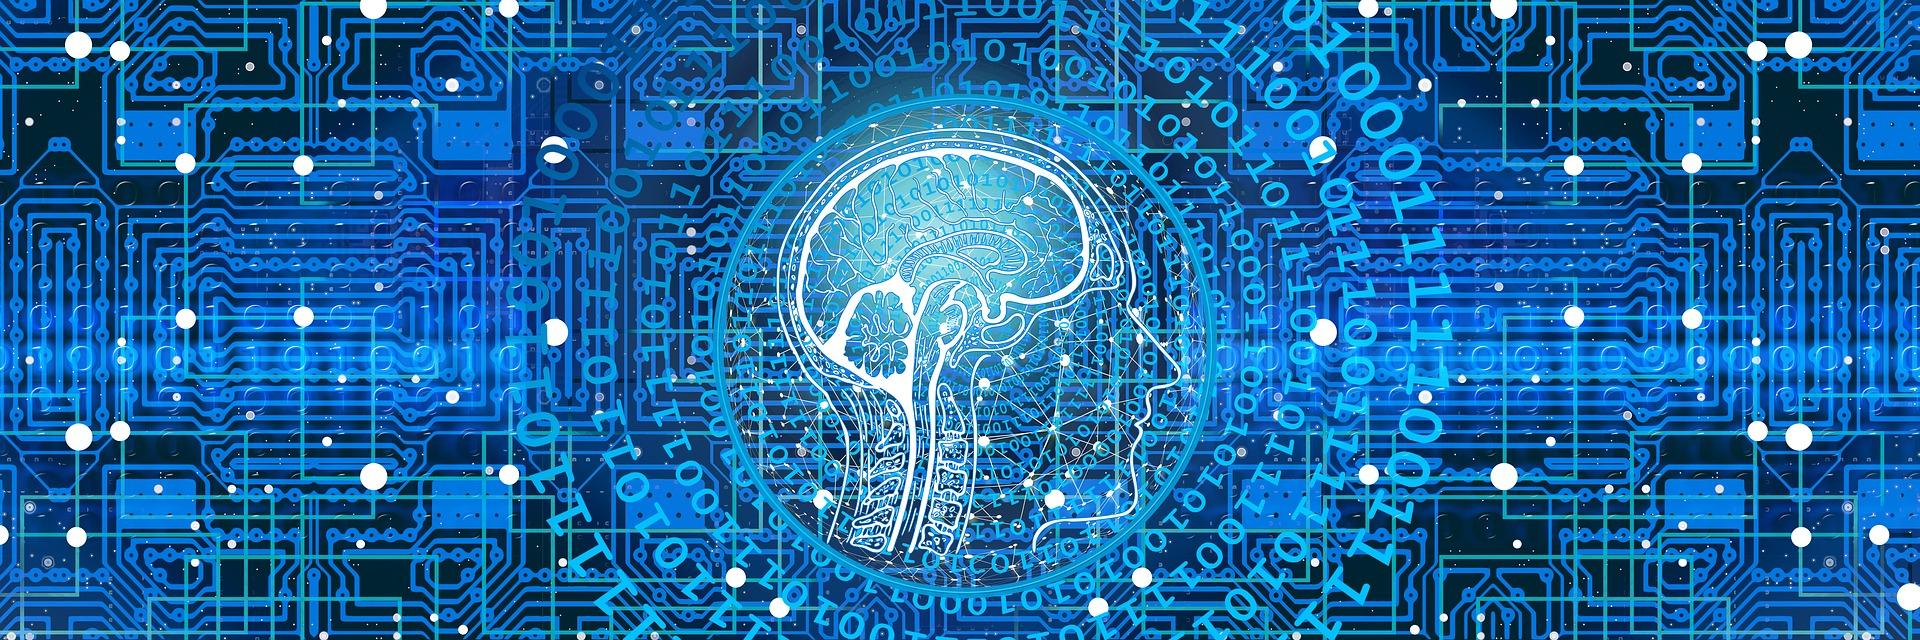 An AI brain on a blue background